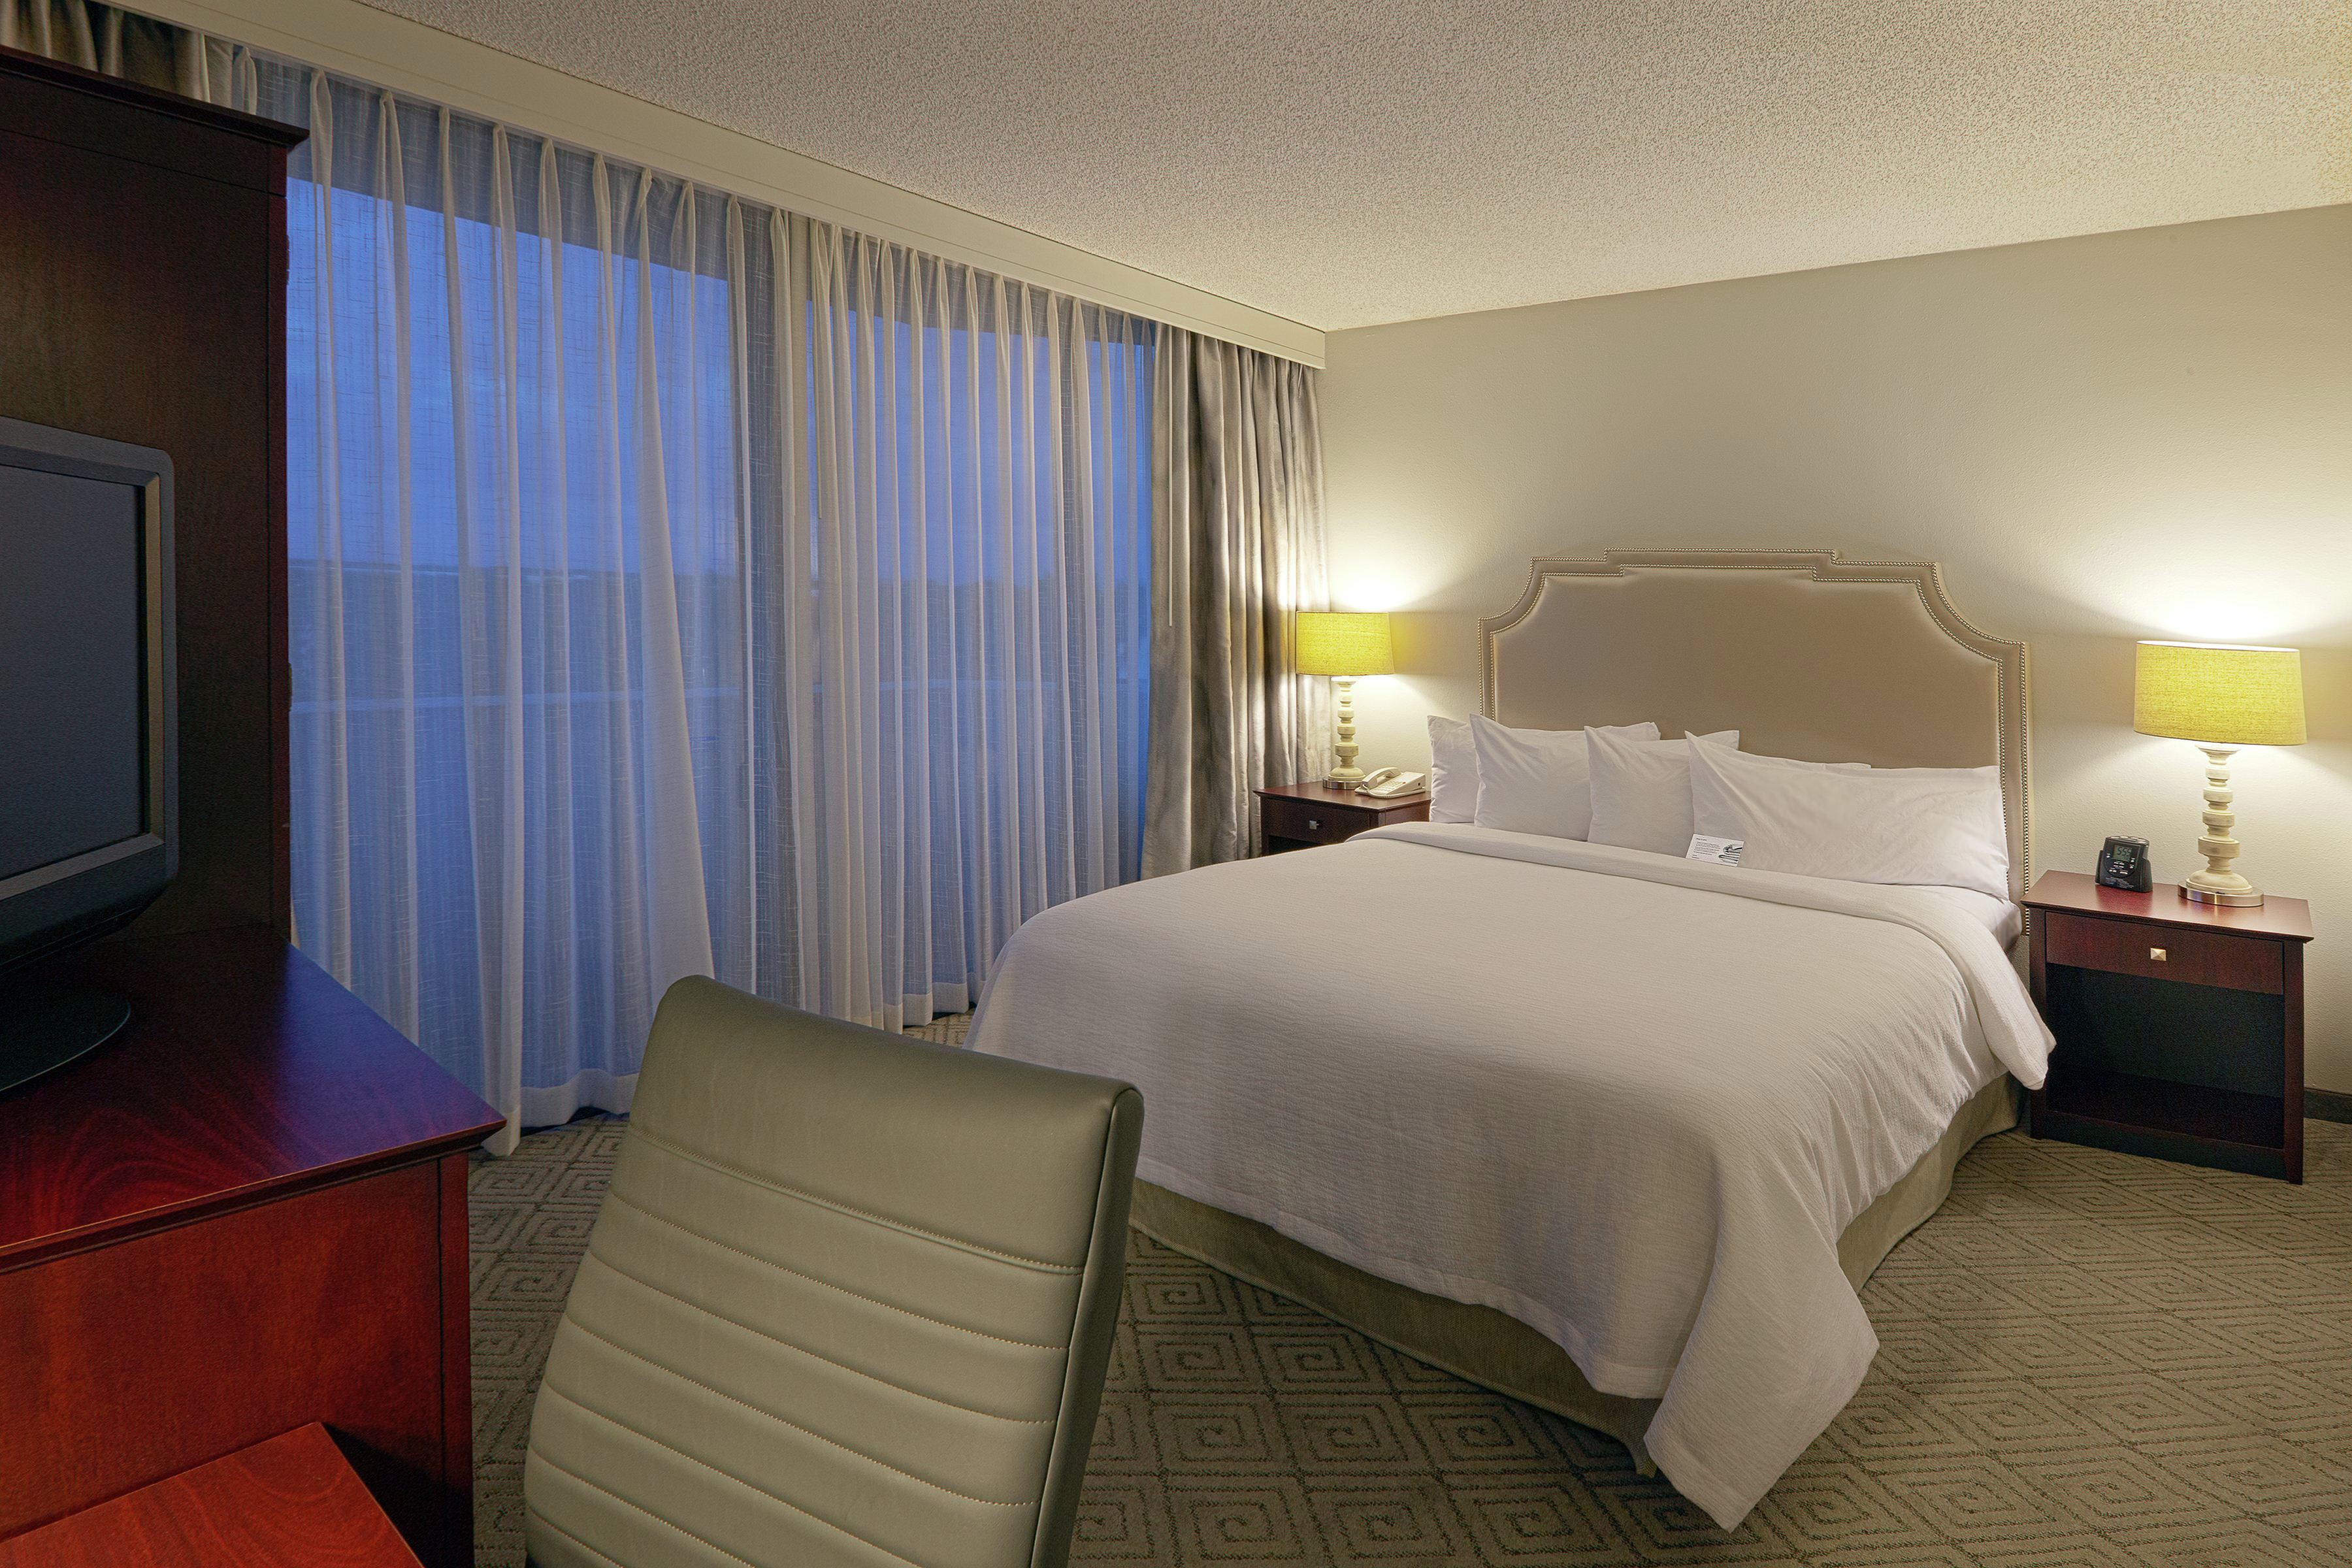 King Bed Hotel Guestroom Suite